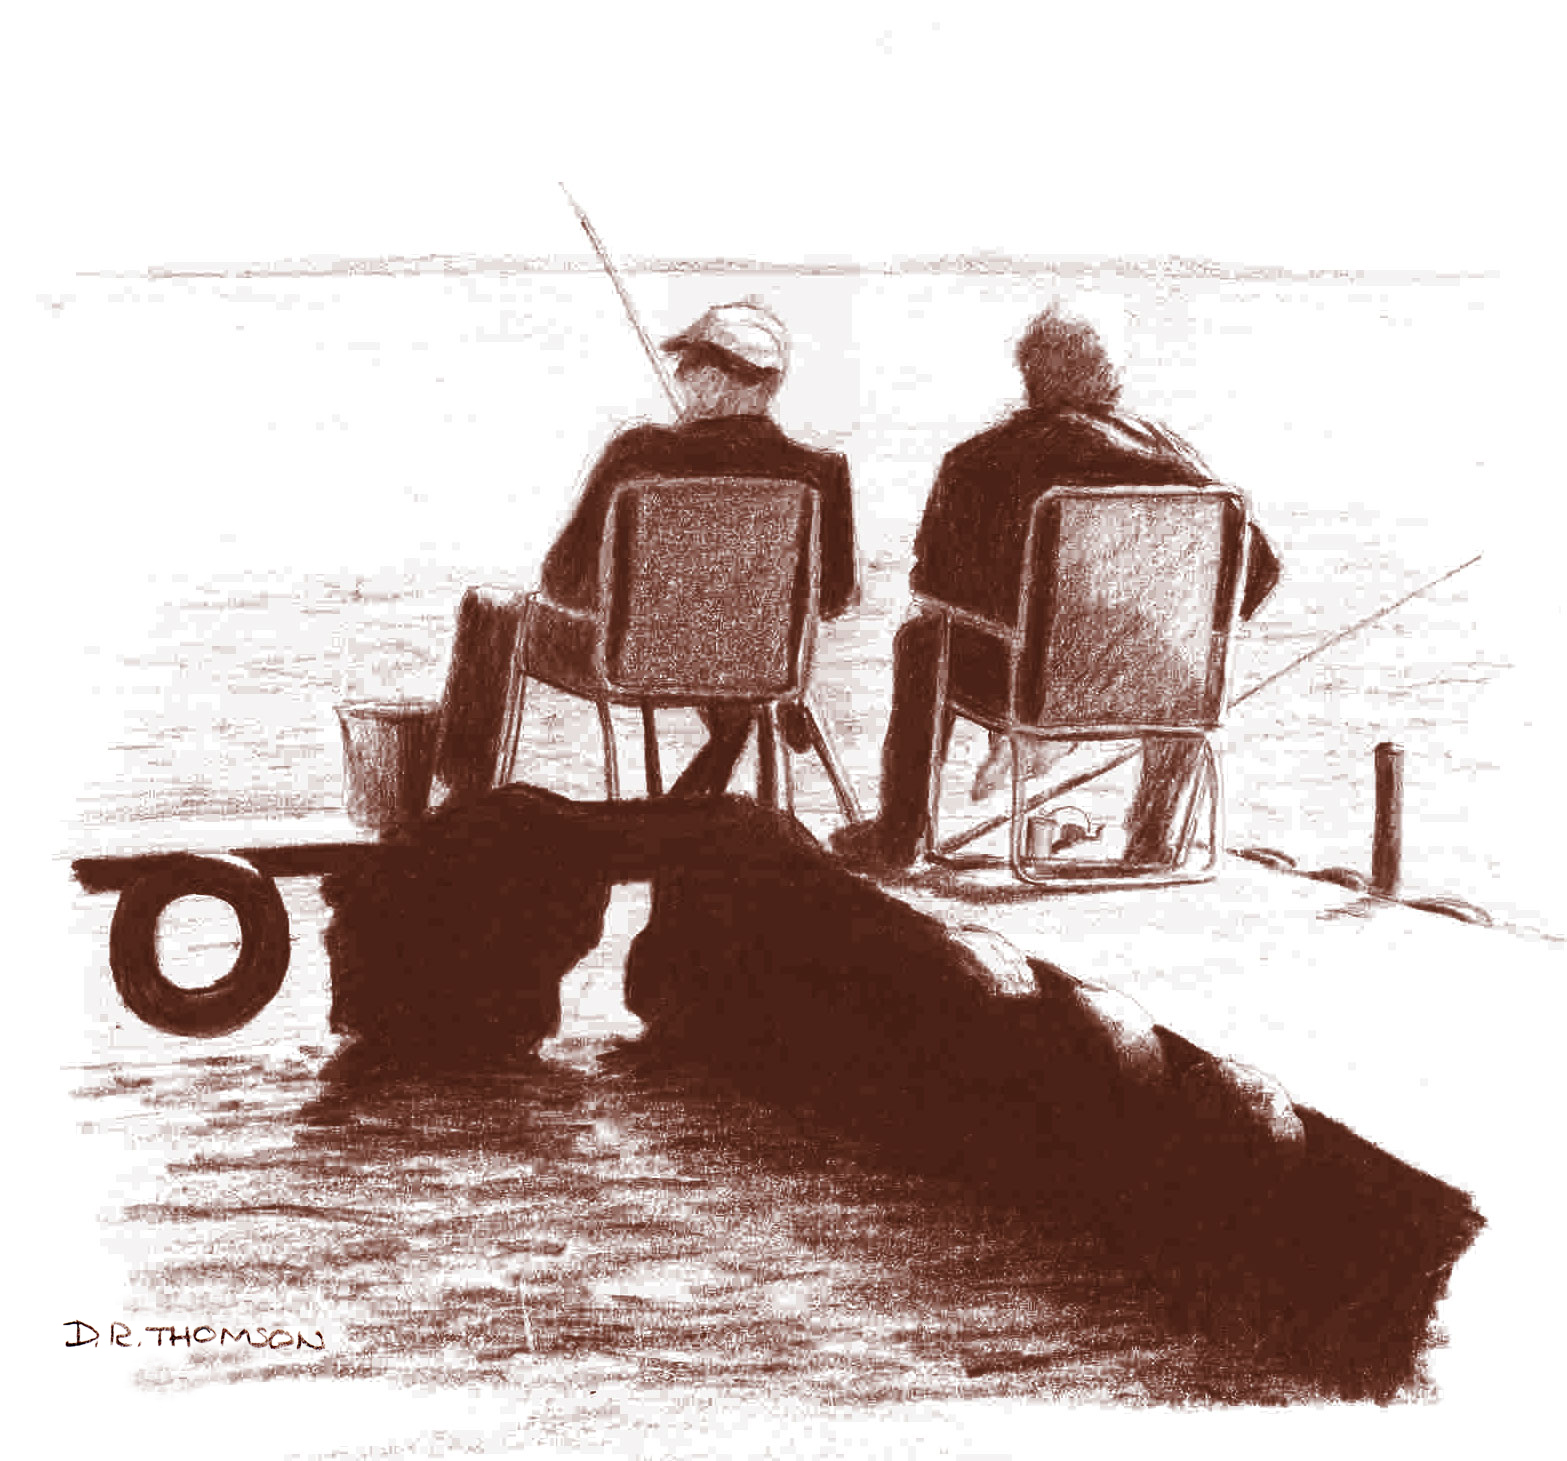 Couple fishing, Lake Bonney, Sth Aus - Sepia pencil